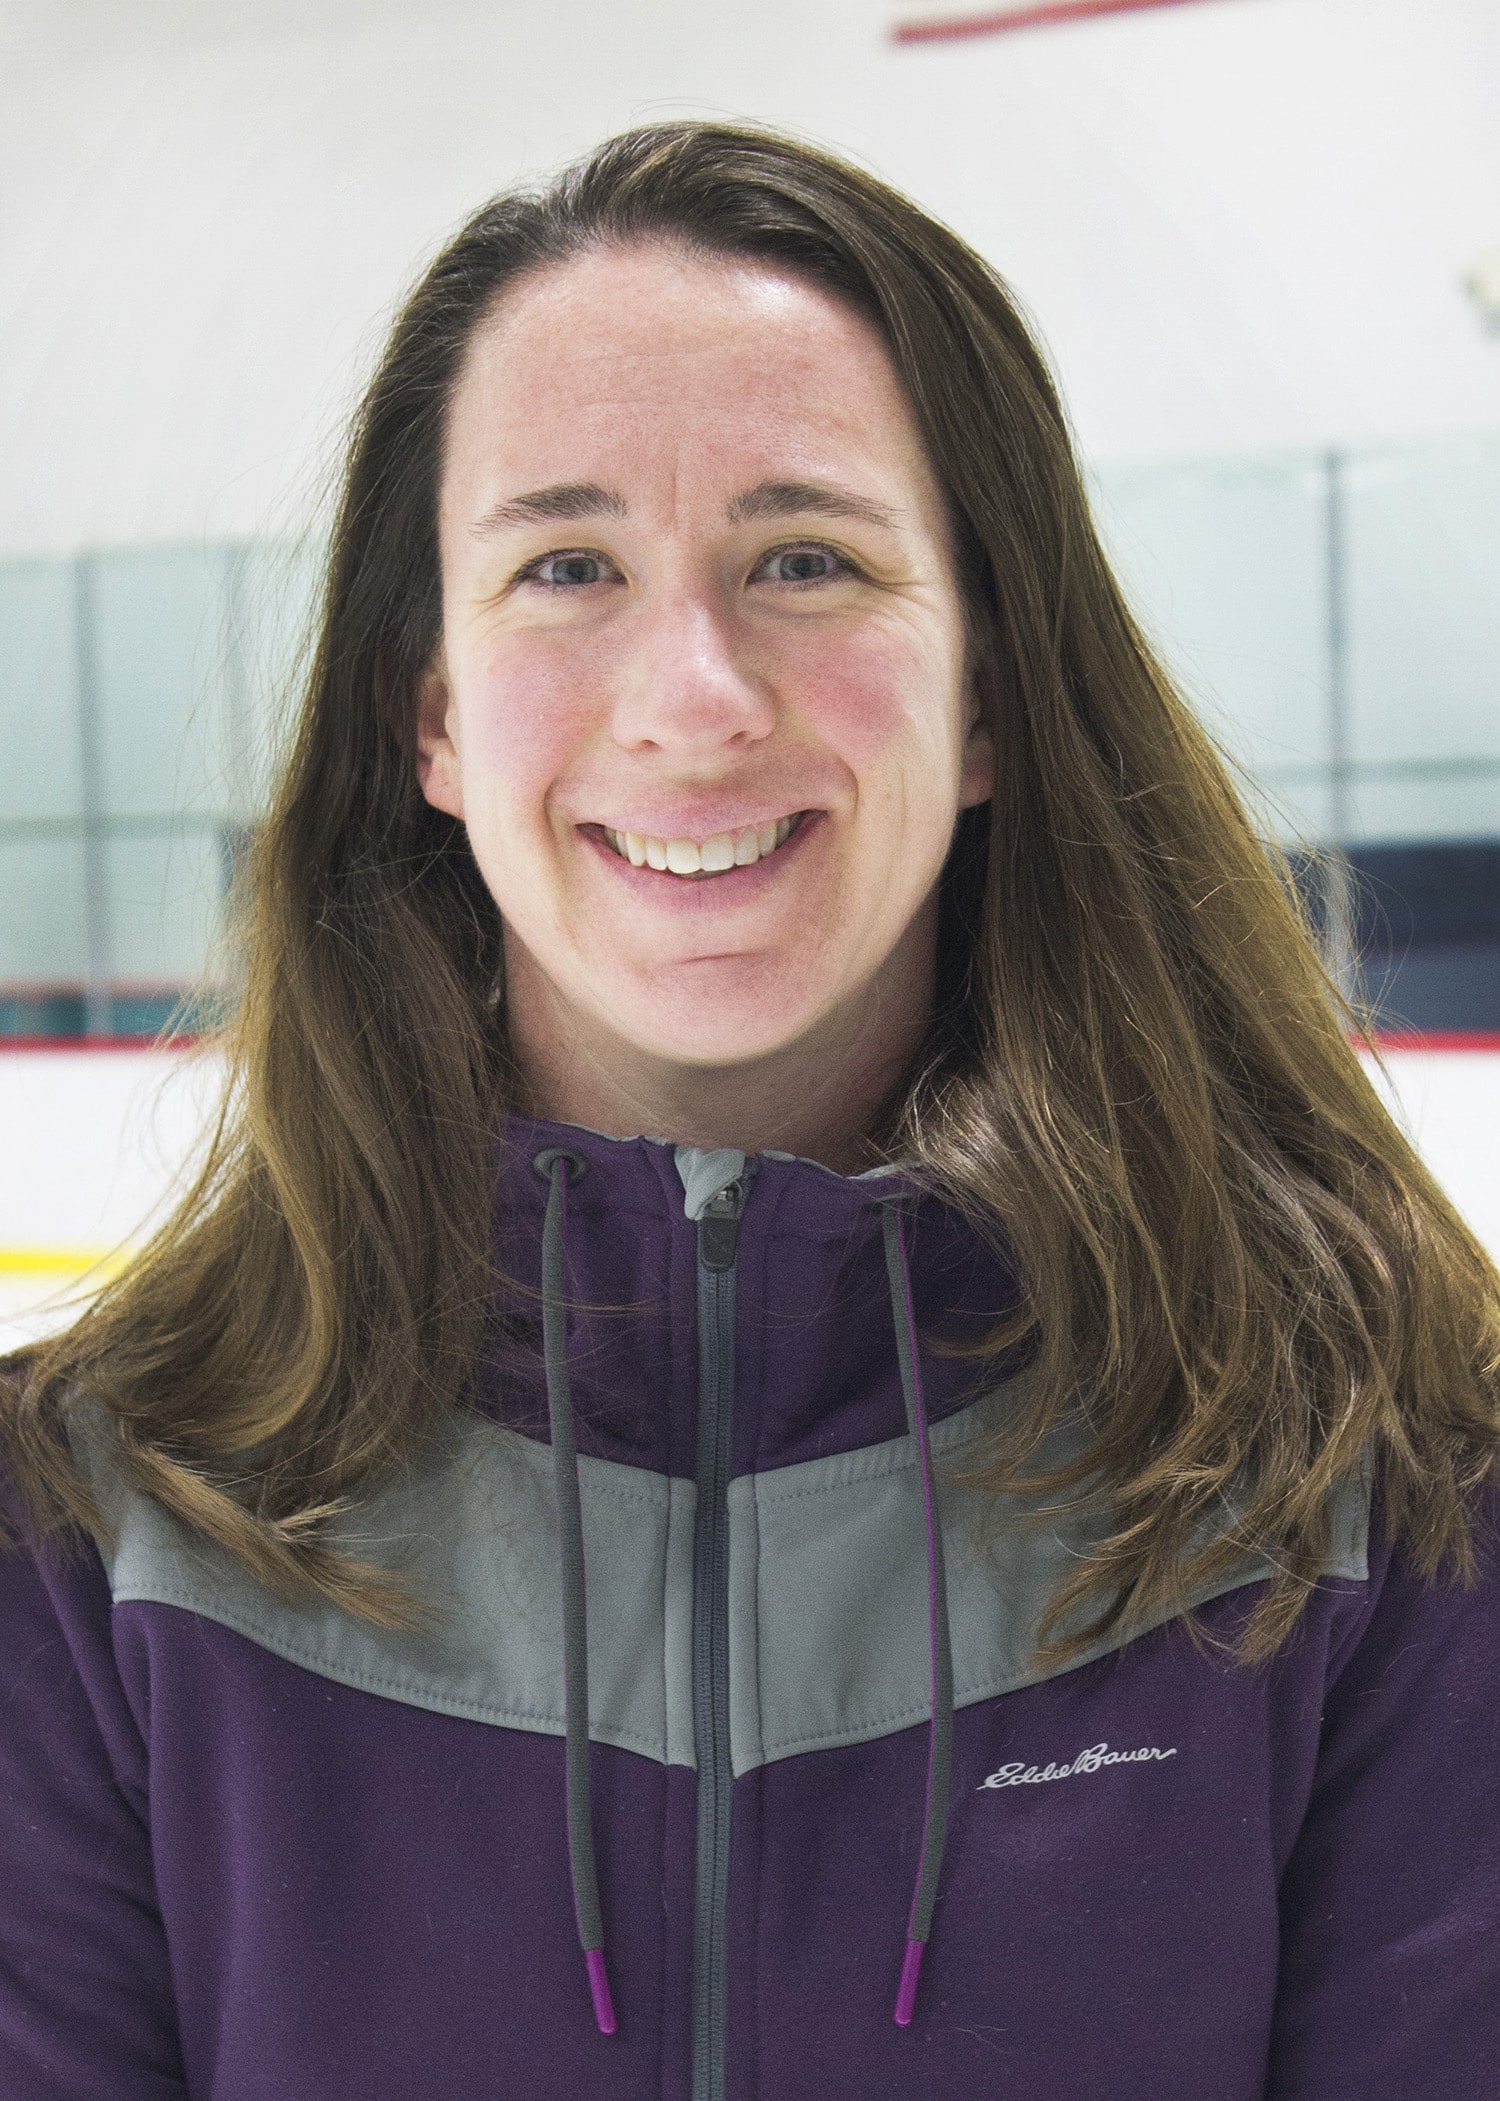 Nicole ice skating coach